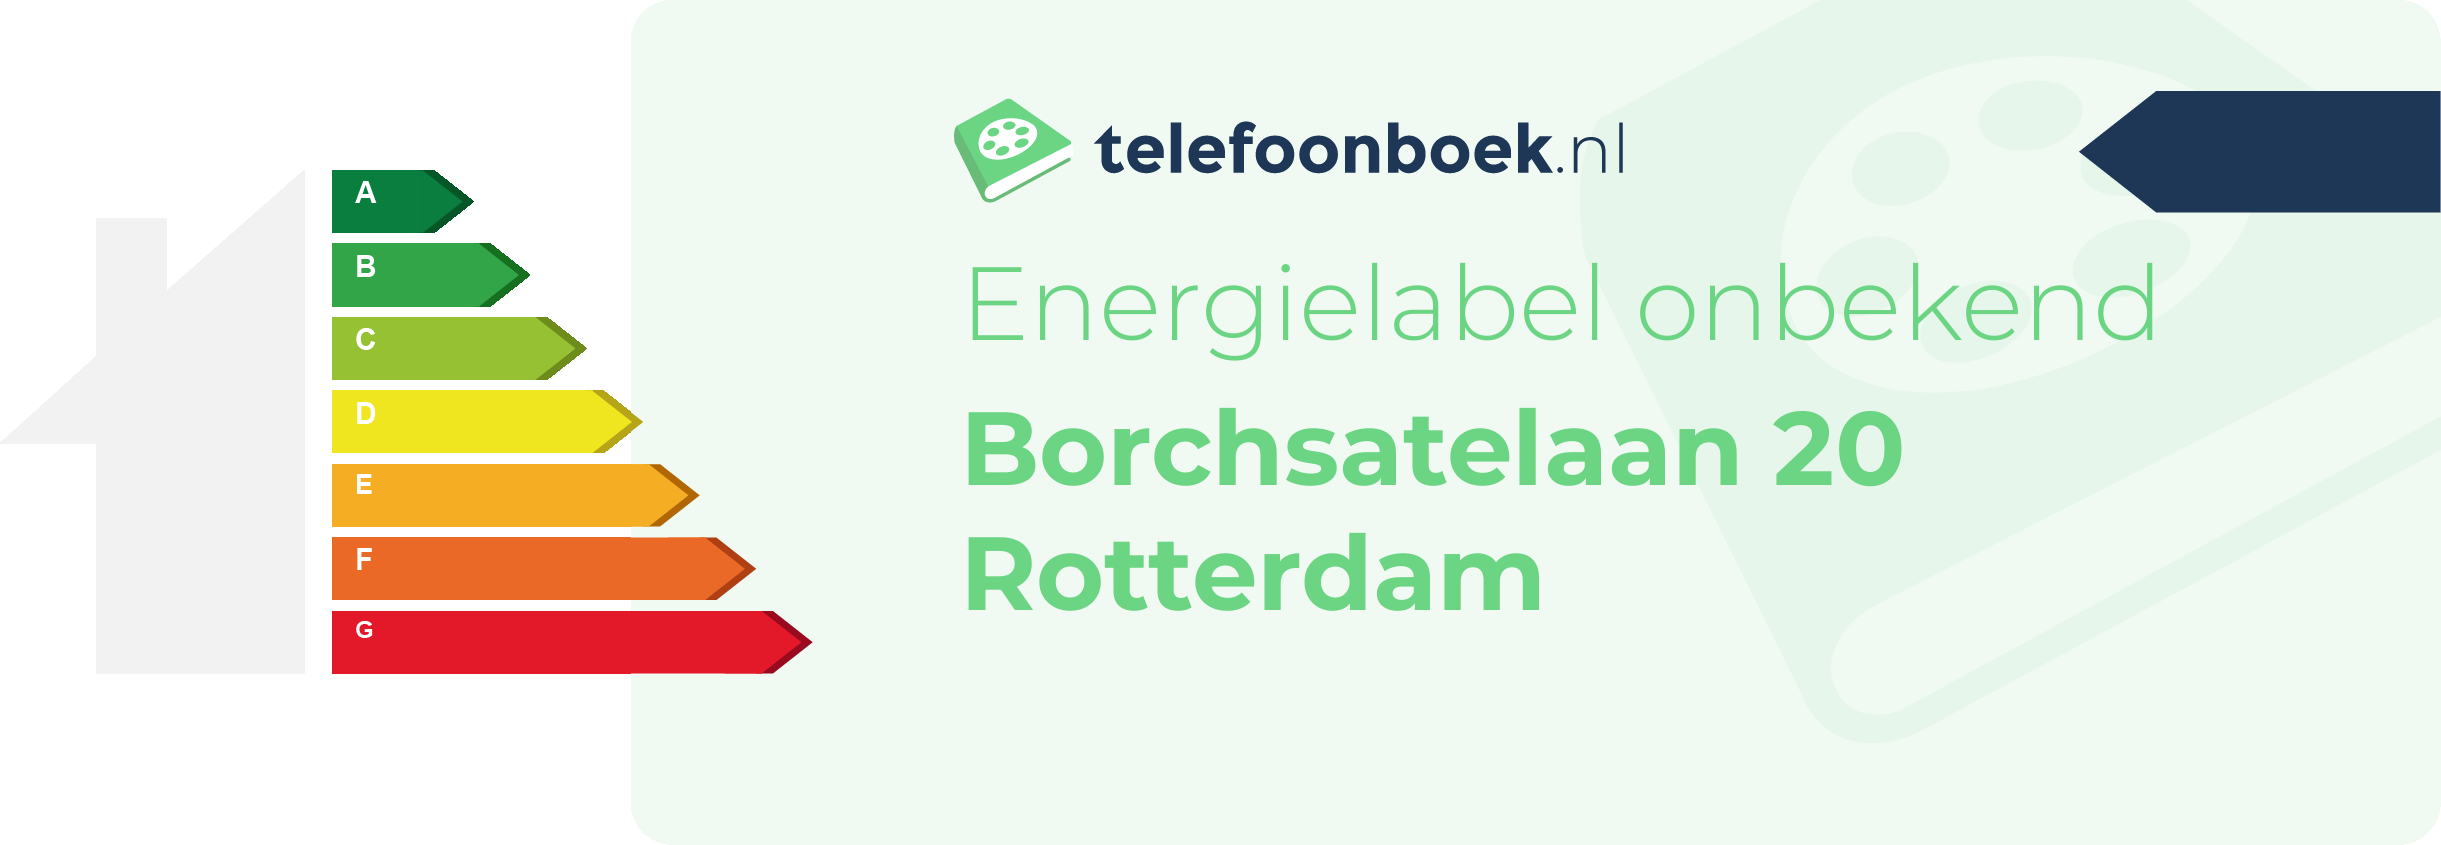 Energielabel Borchsatelaan 20 Rotterdam